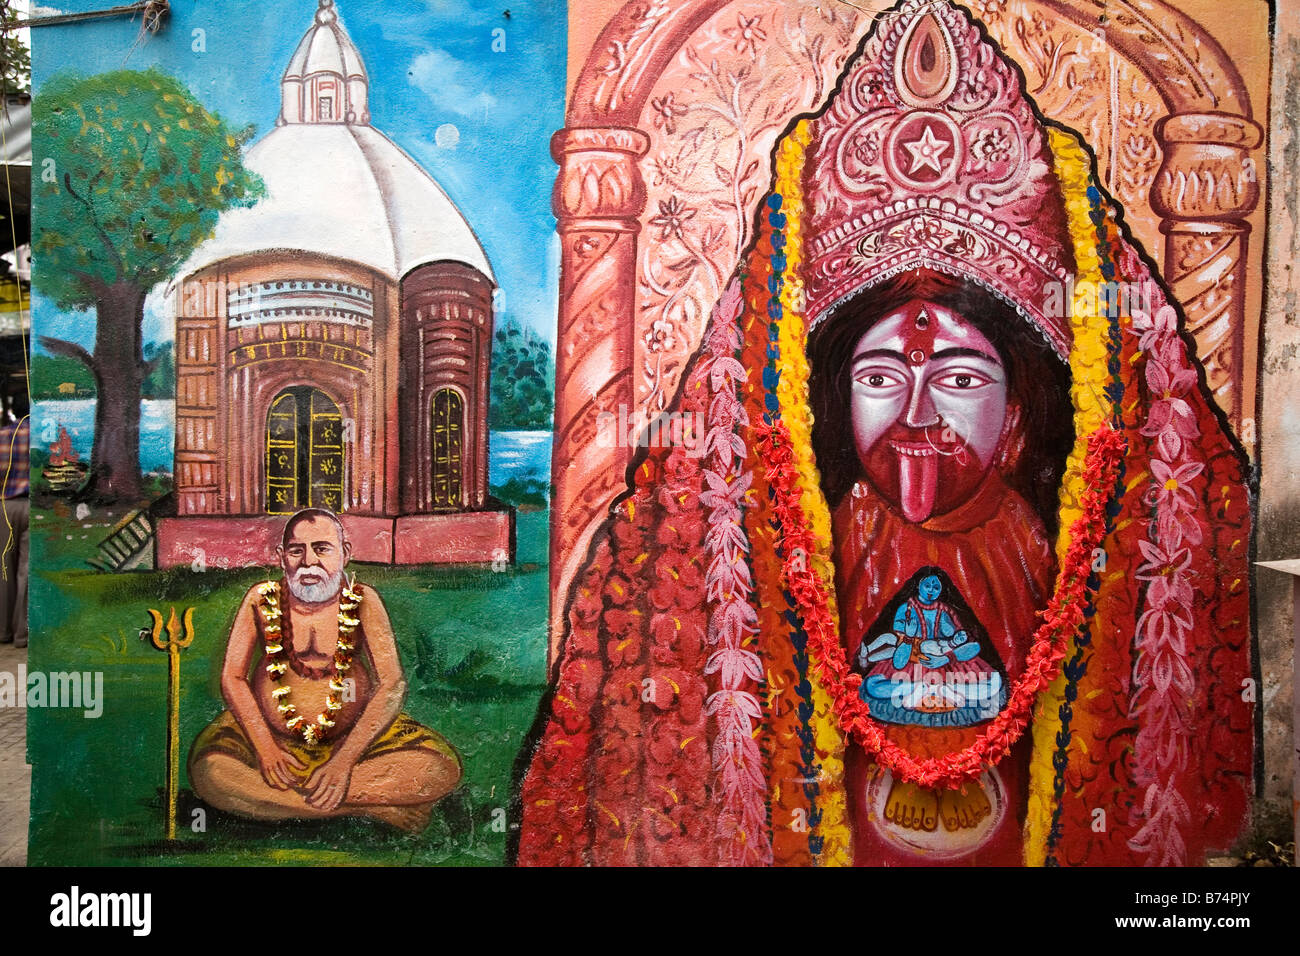 An image of the blood tongued Hindu goddess Kali is painted onto an exterior wall in Kolkata, India. Stock Photo